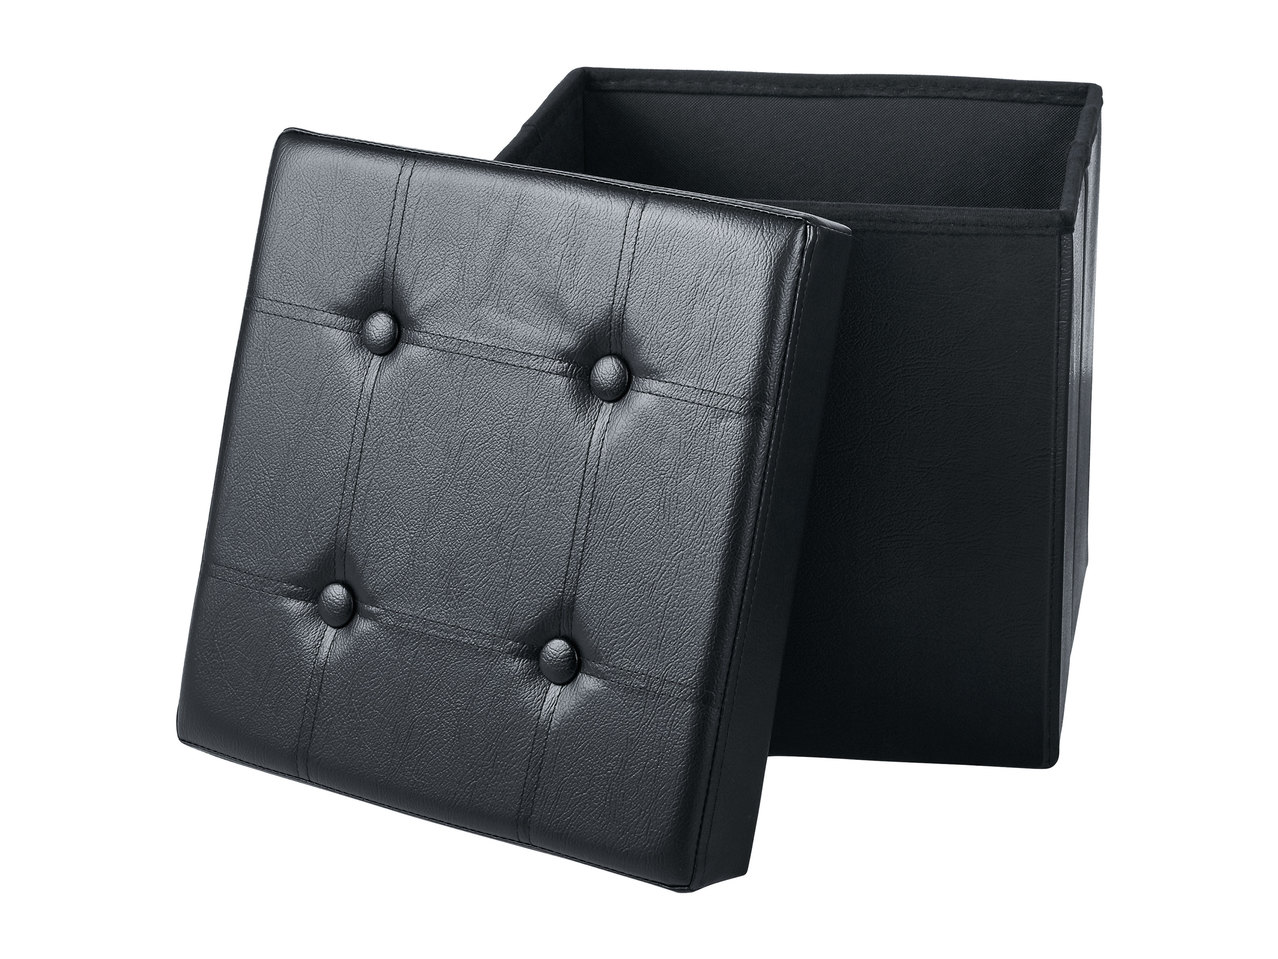 Livarno Living Faux Leather Storage Footstool1